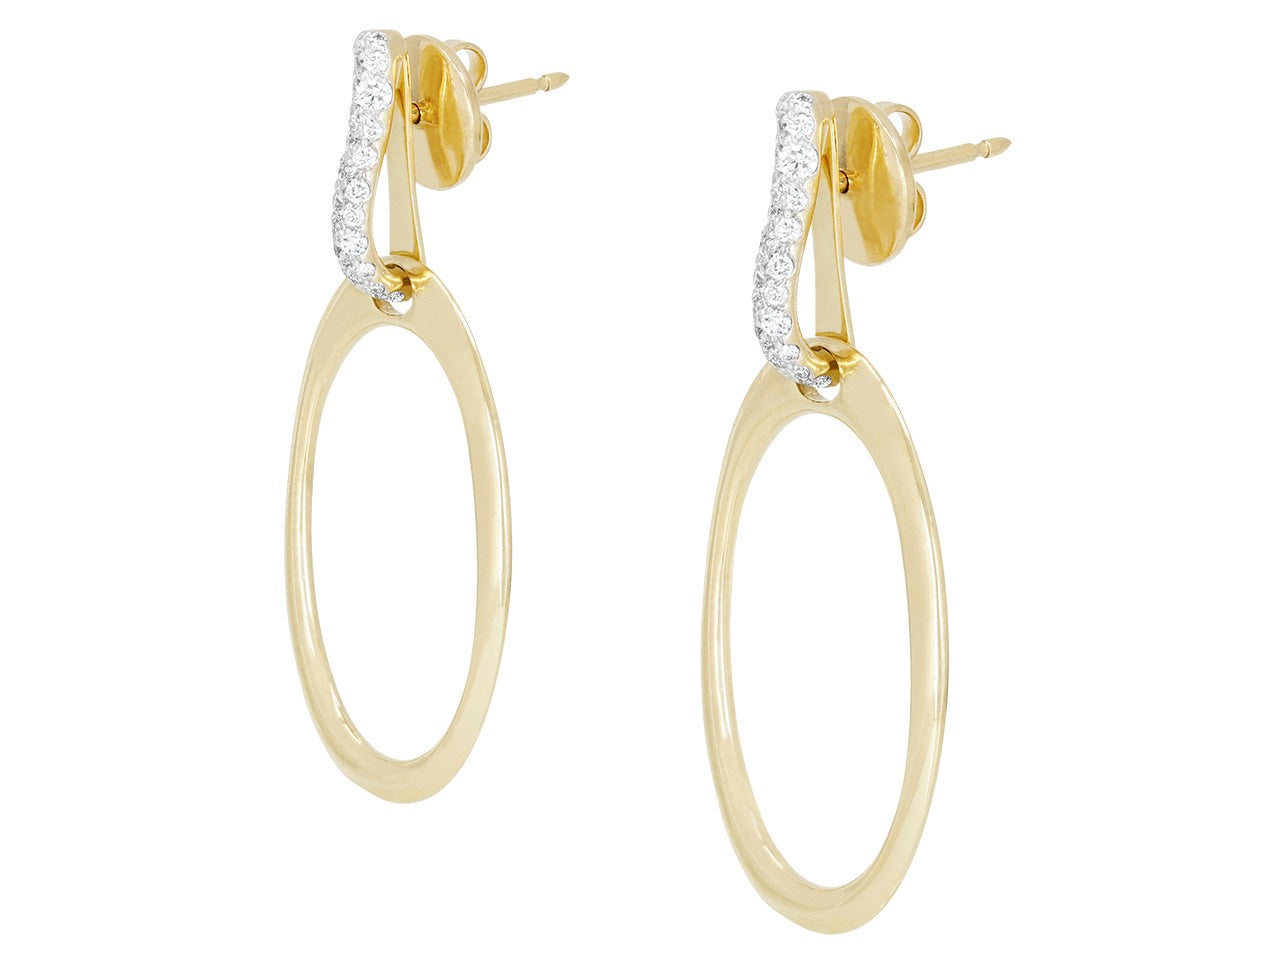 Hoop Earrings with Diamond Tops in 18K Gold, by Beladora